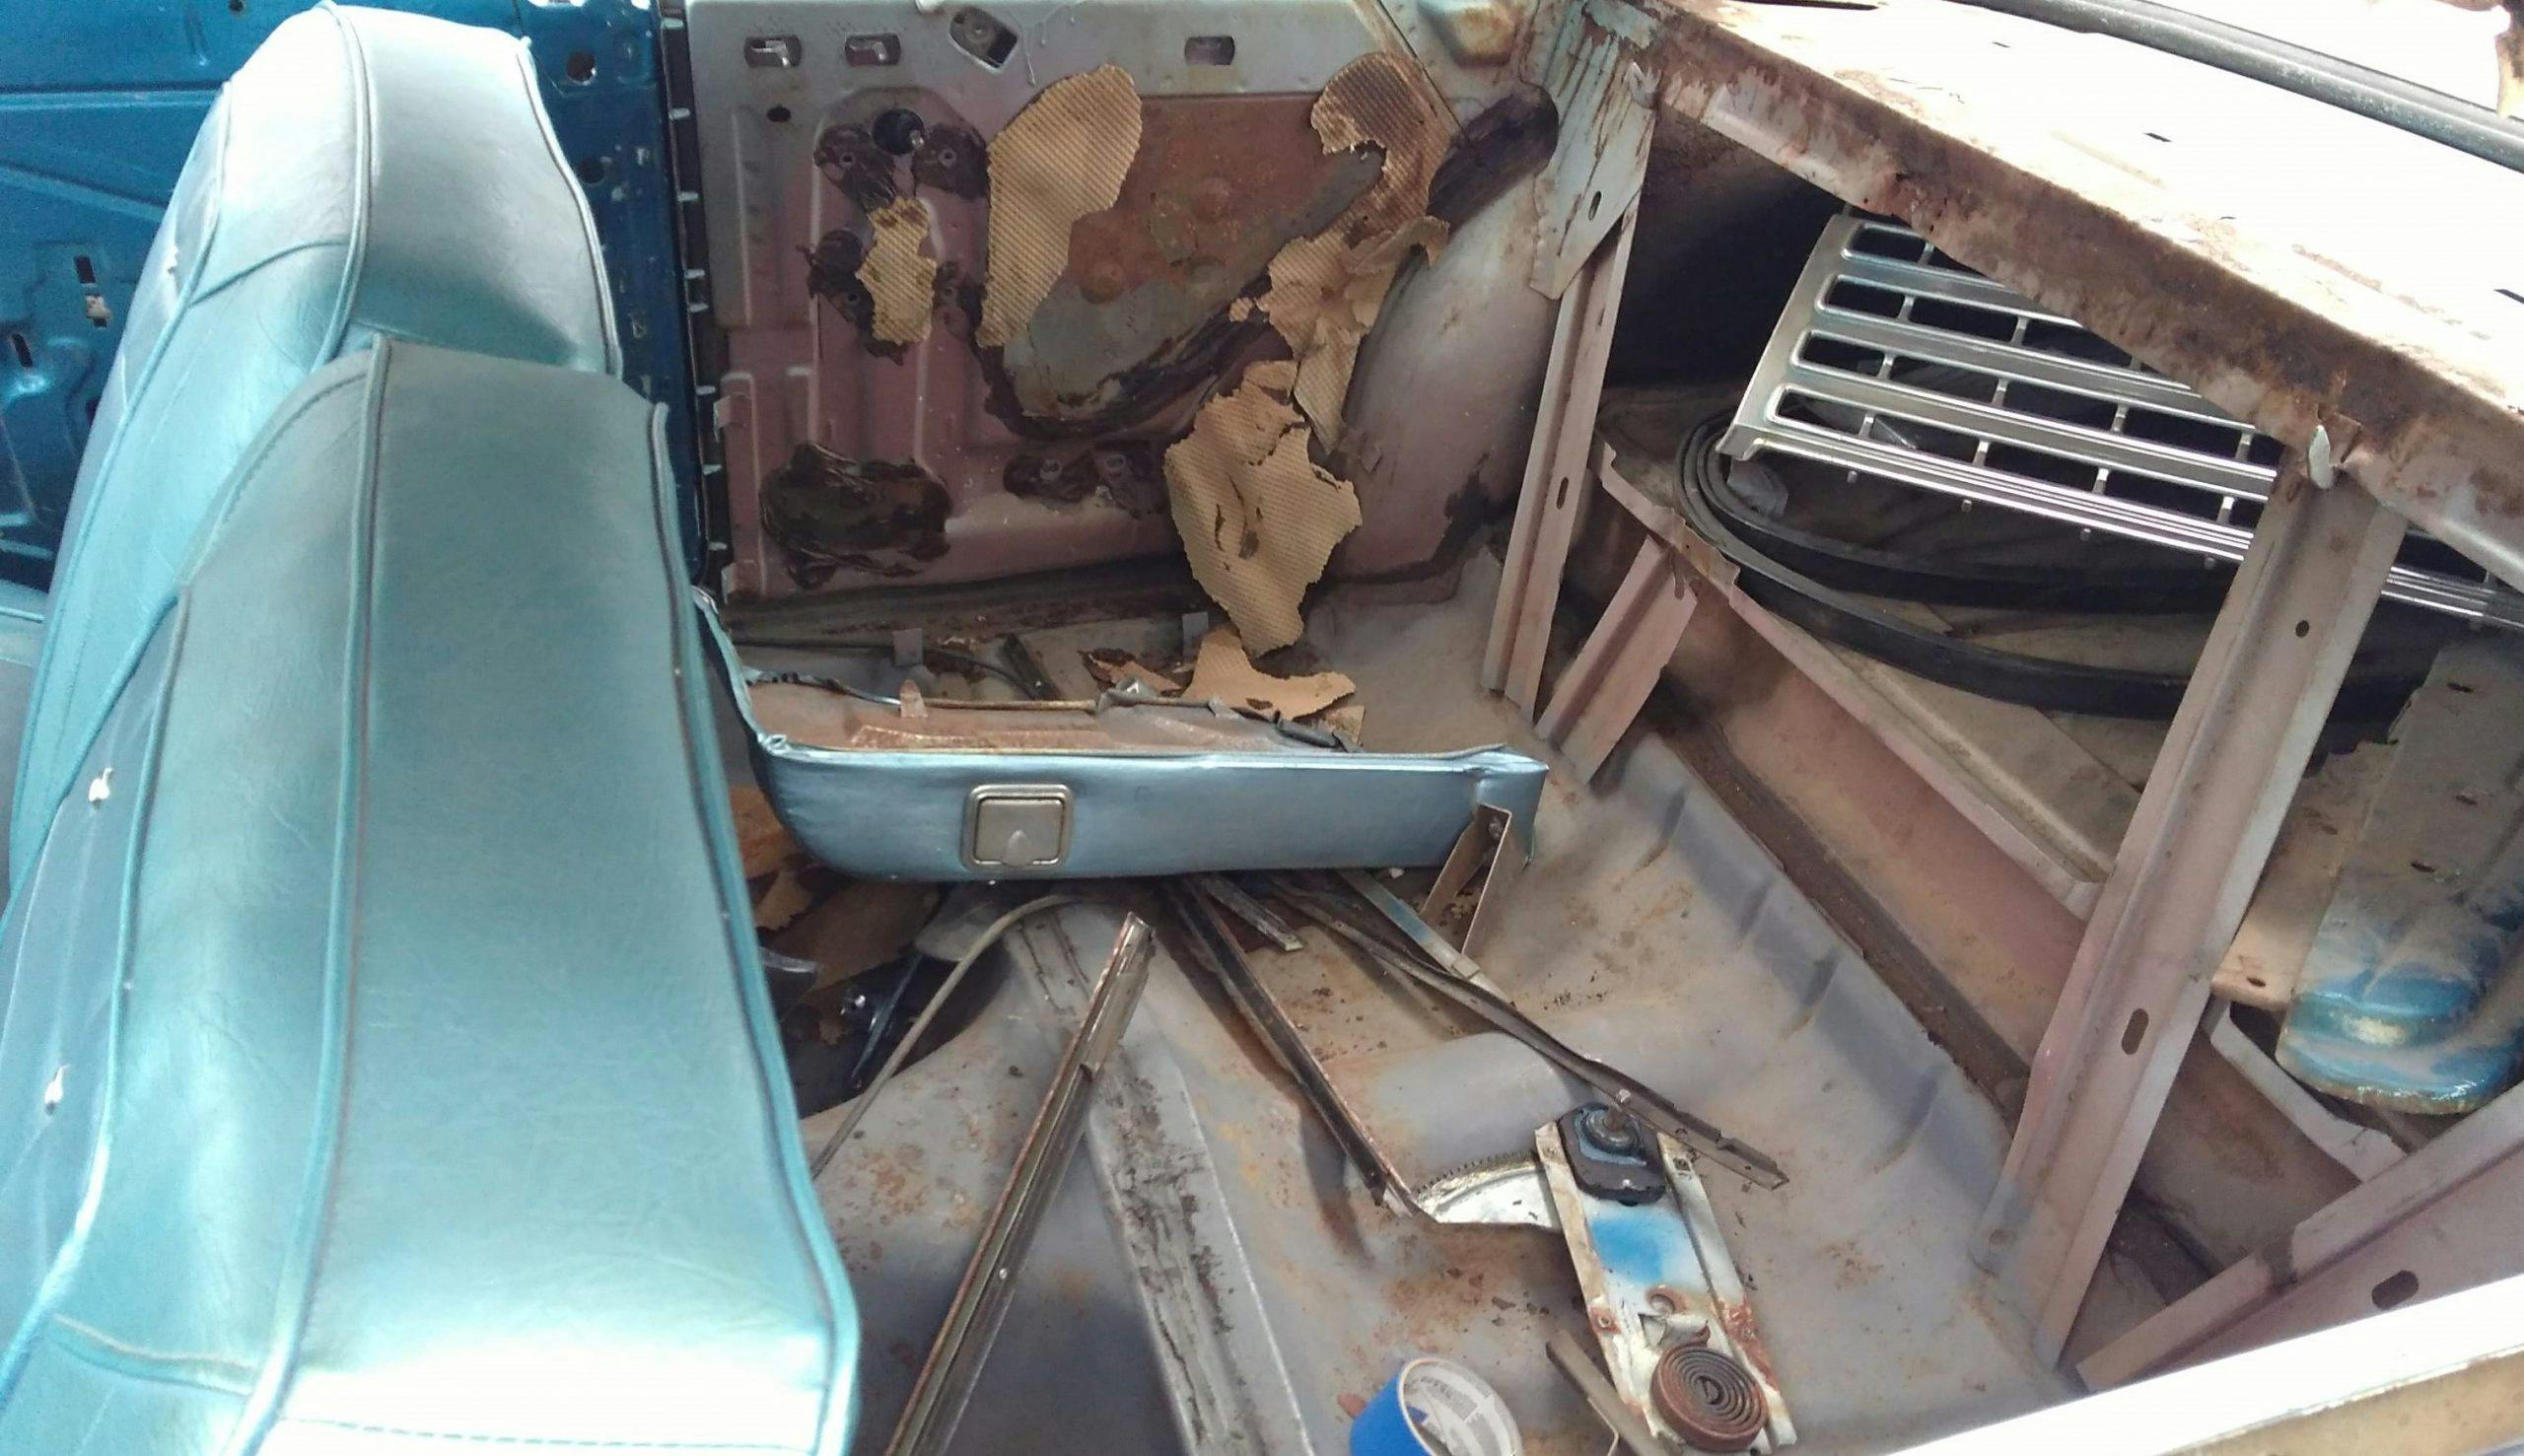 Jason Prince - 1962 Chevrolet Impala - Before resto - Interior rear seats